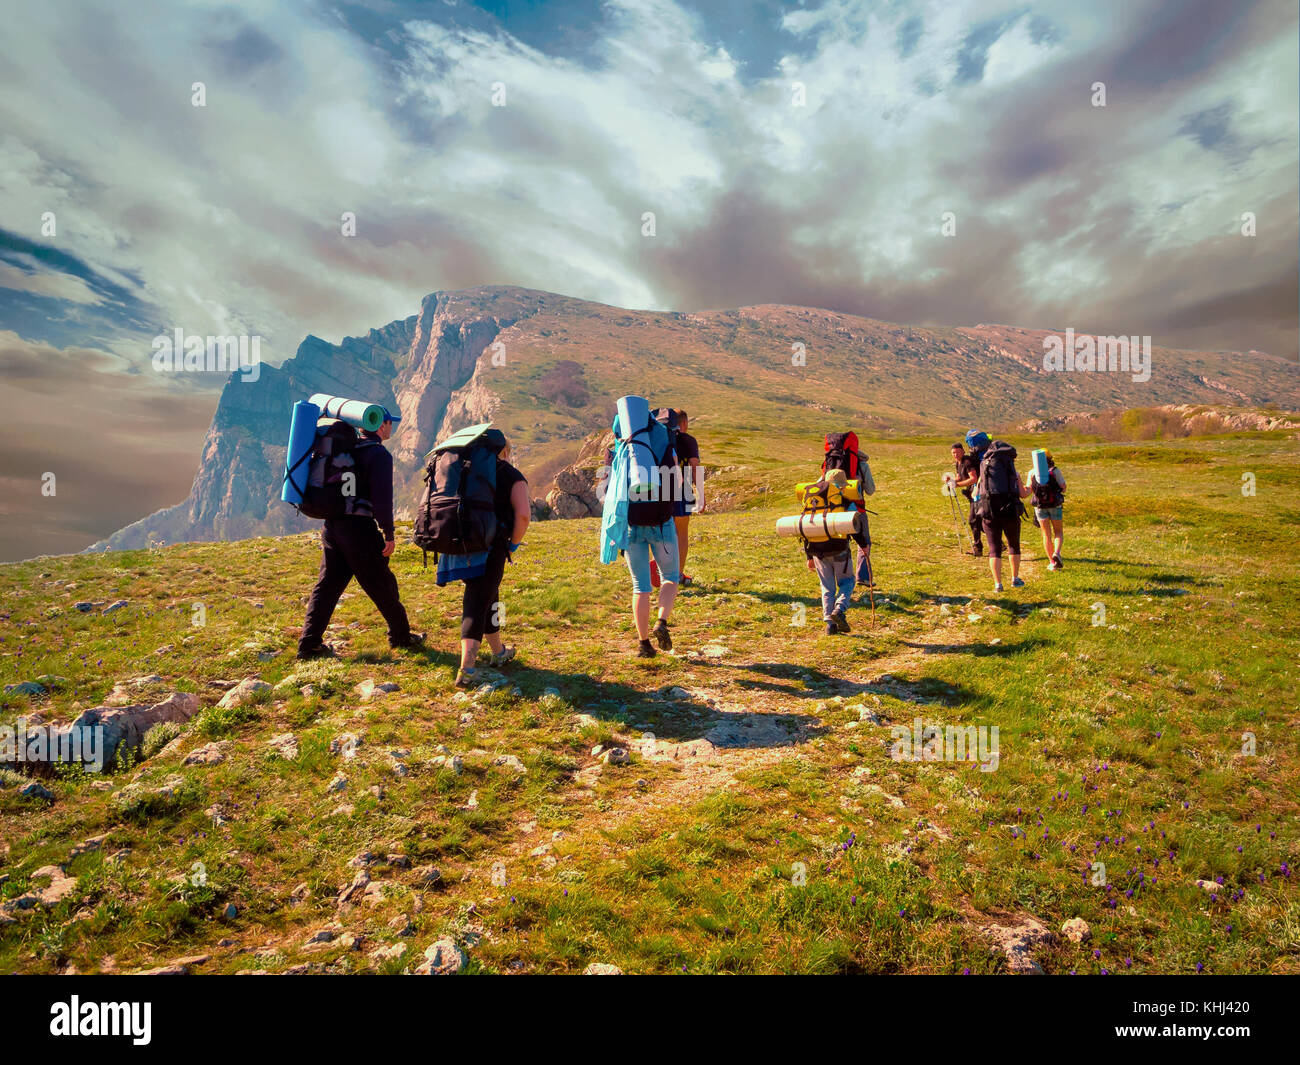 Hikers group trekking in Crimea Stock Photo